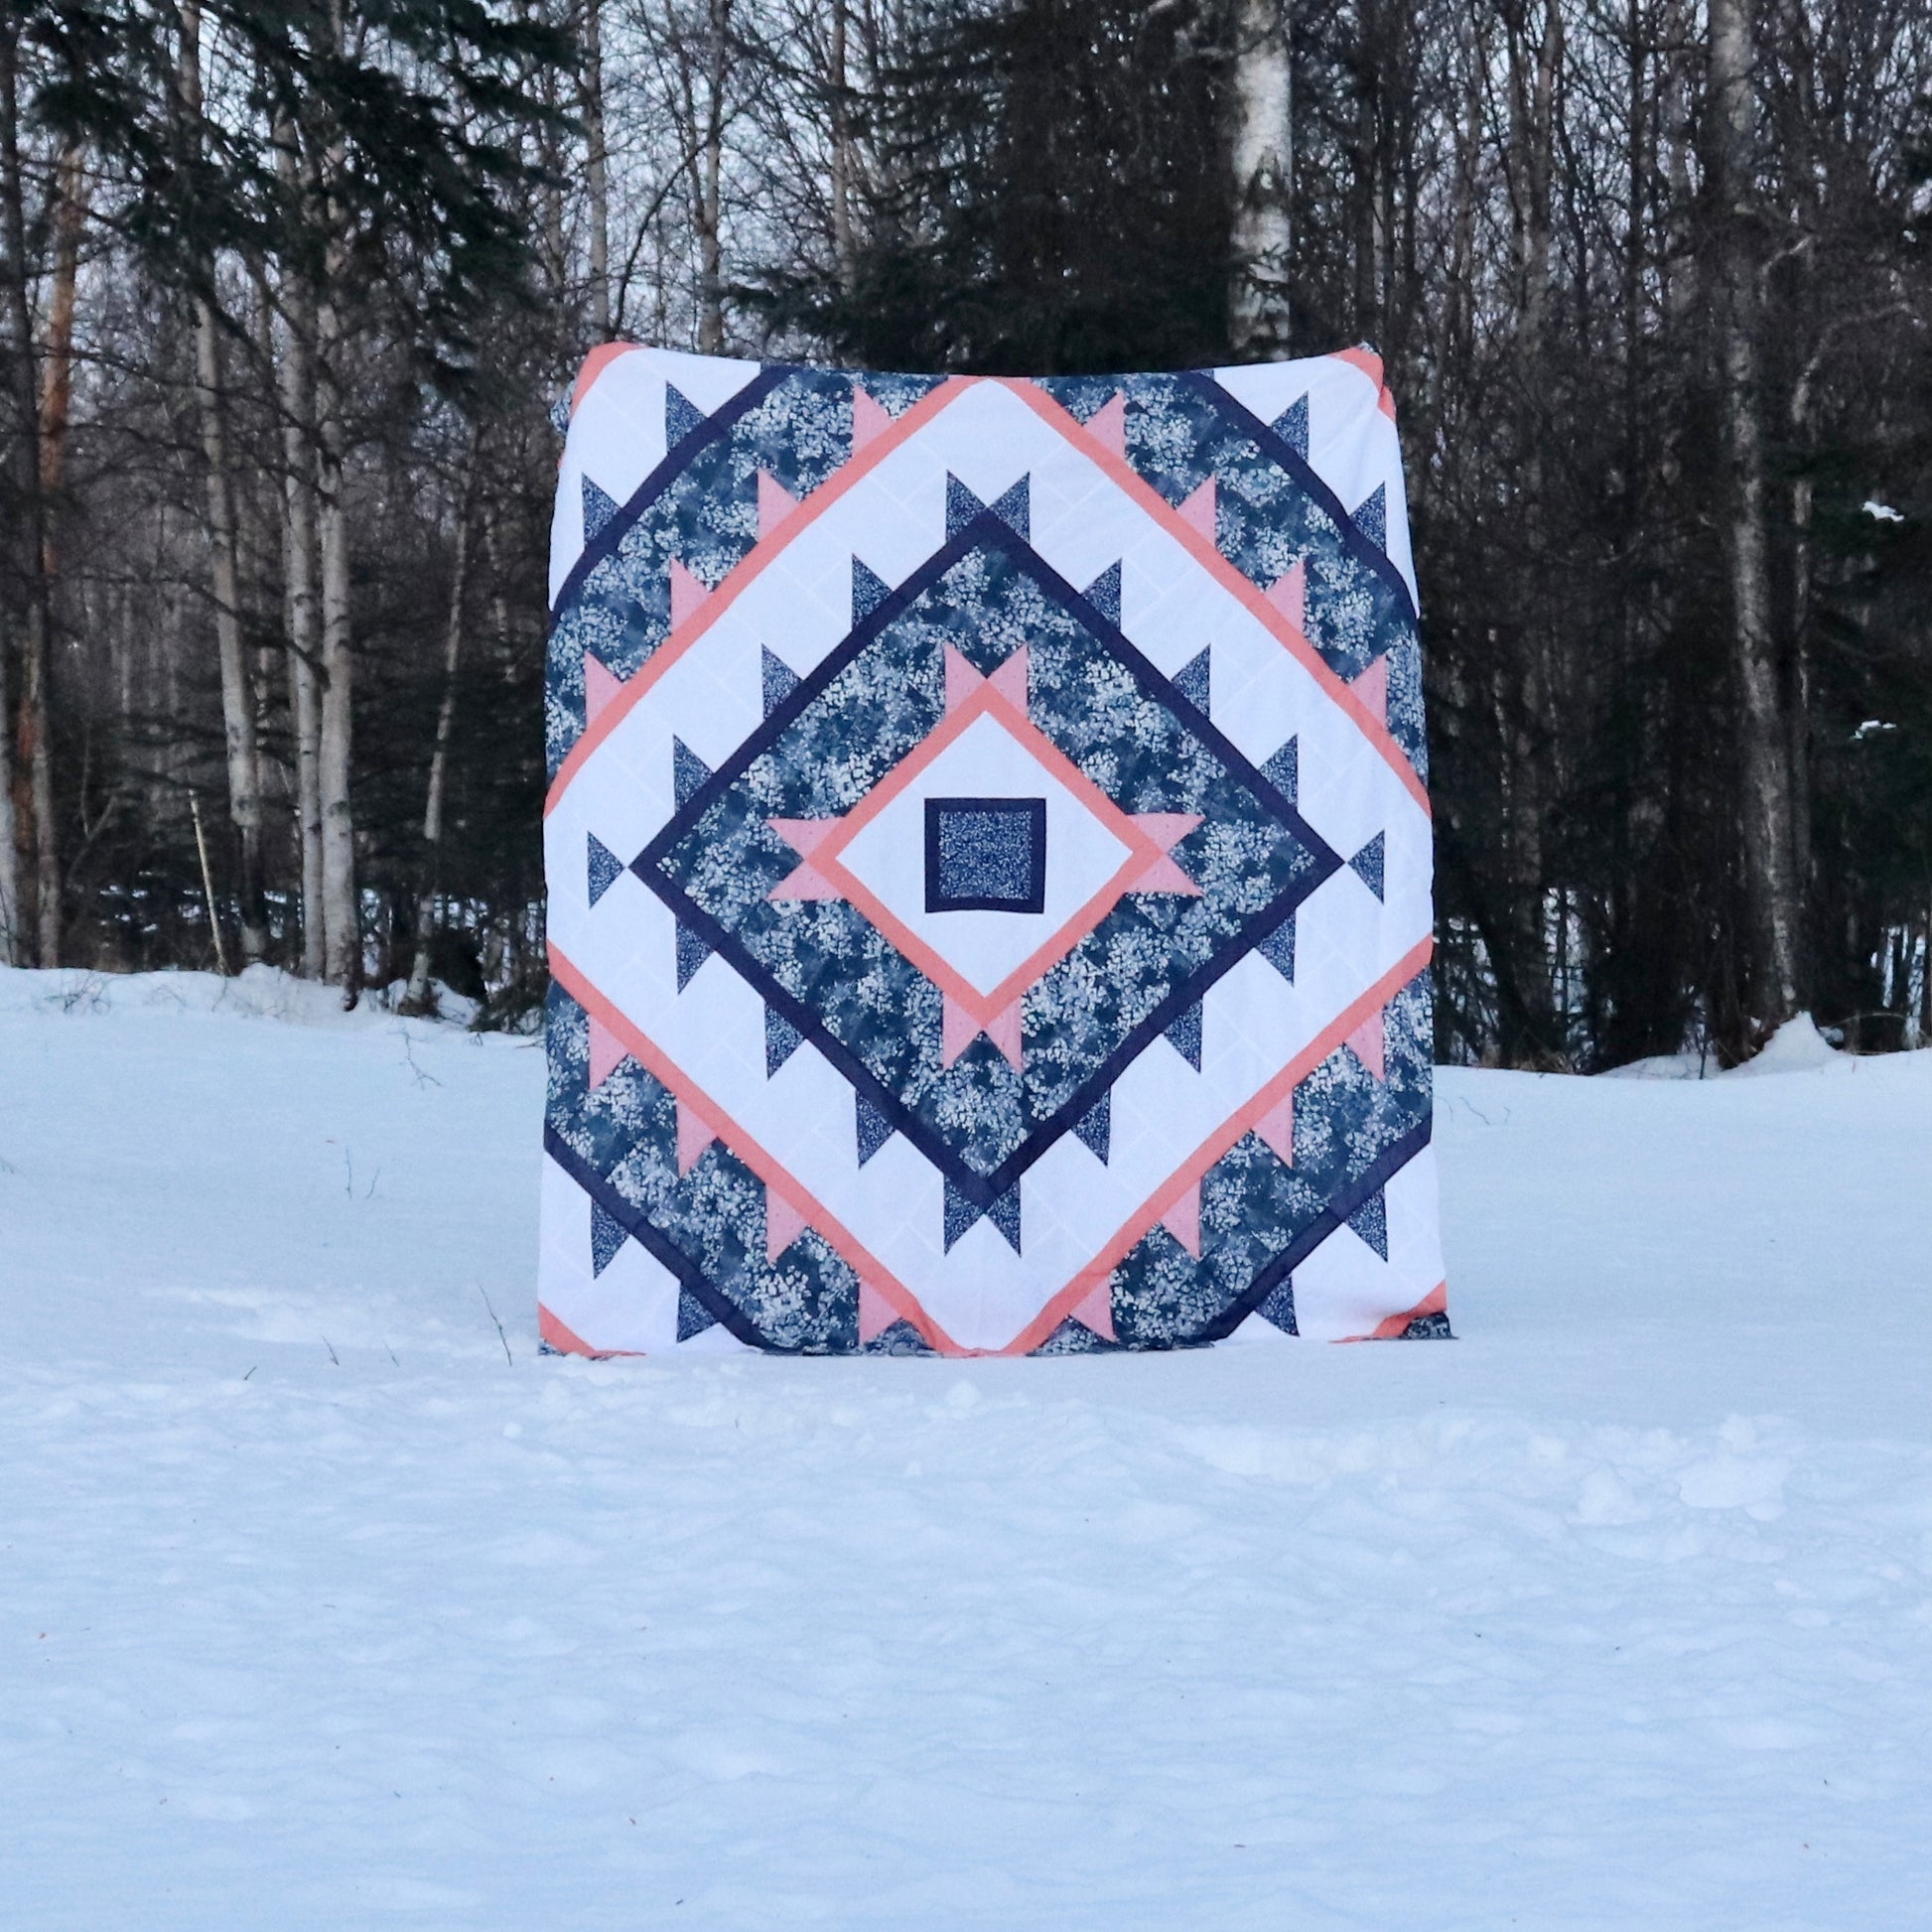 Green Lake Quilt Pattern - Julia Wachs Designs - A Green Lake quilt pattern is held by its maker in the snow.